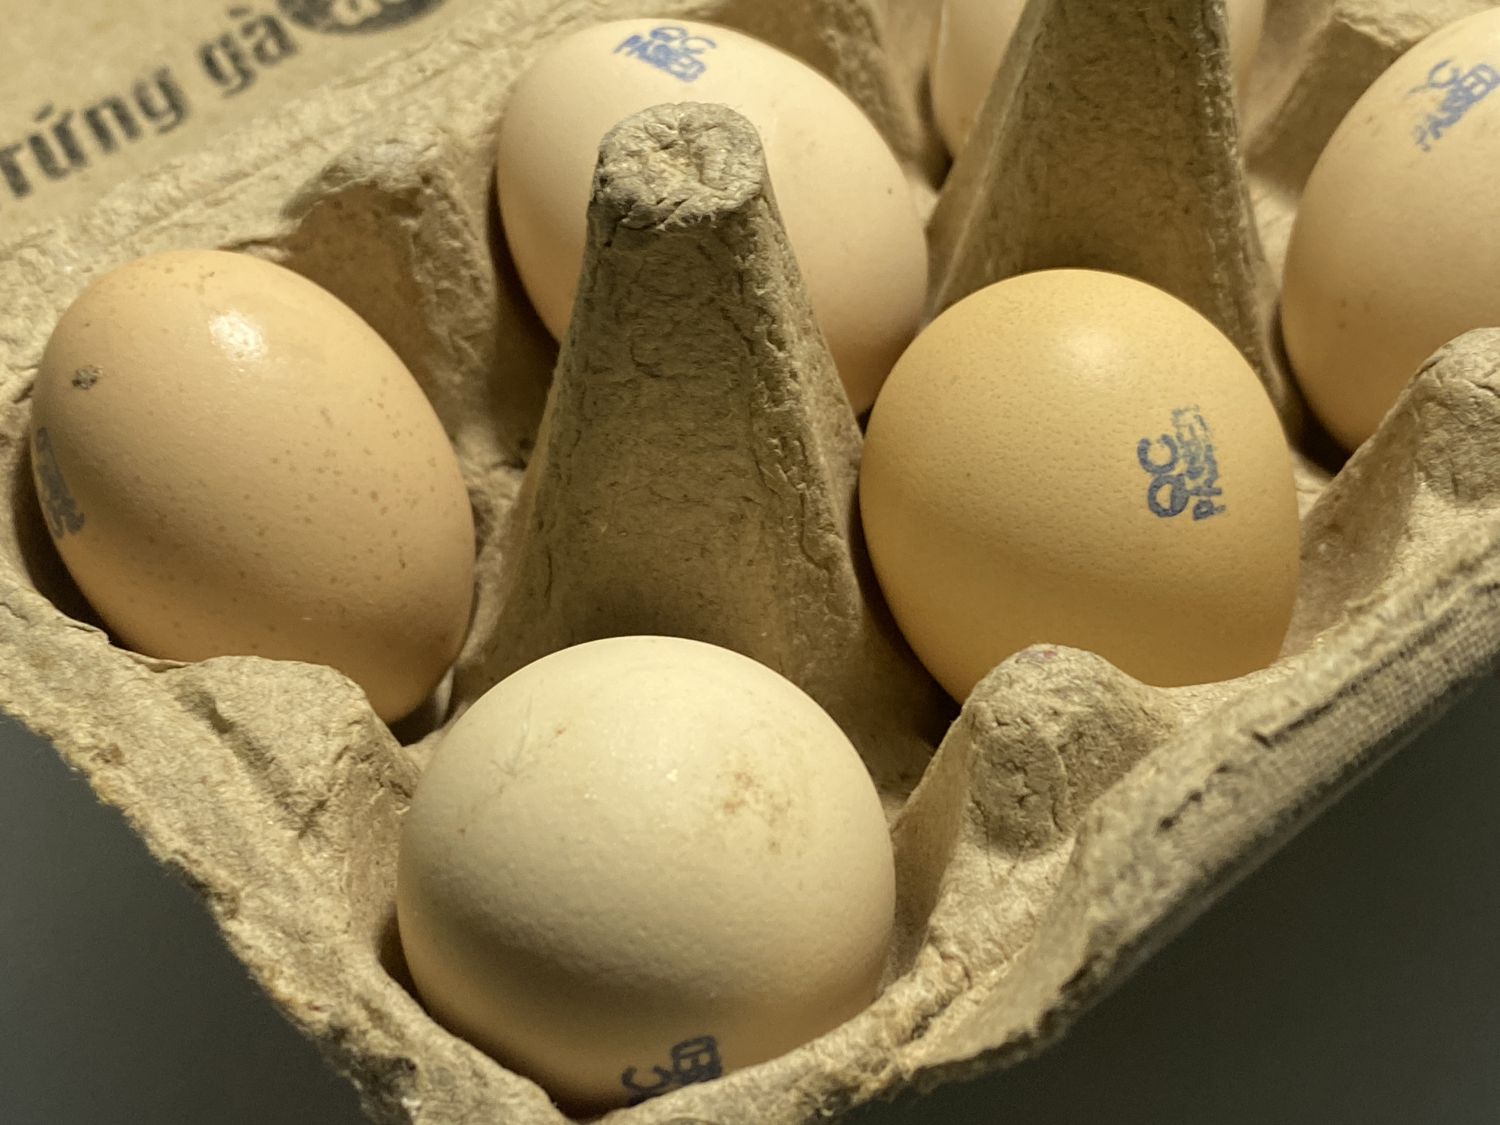 FAQ: What is silkie egg?